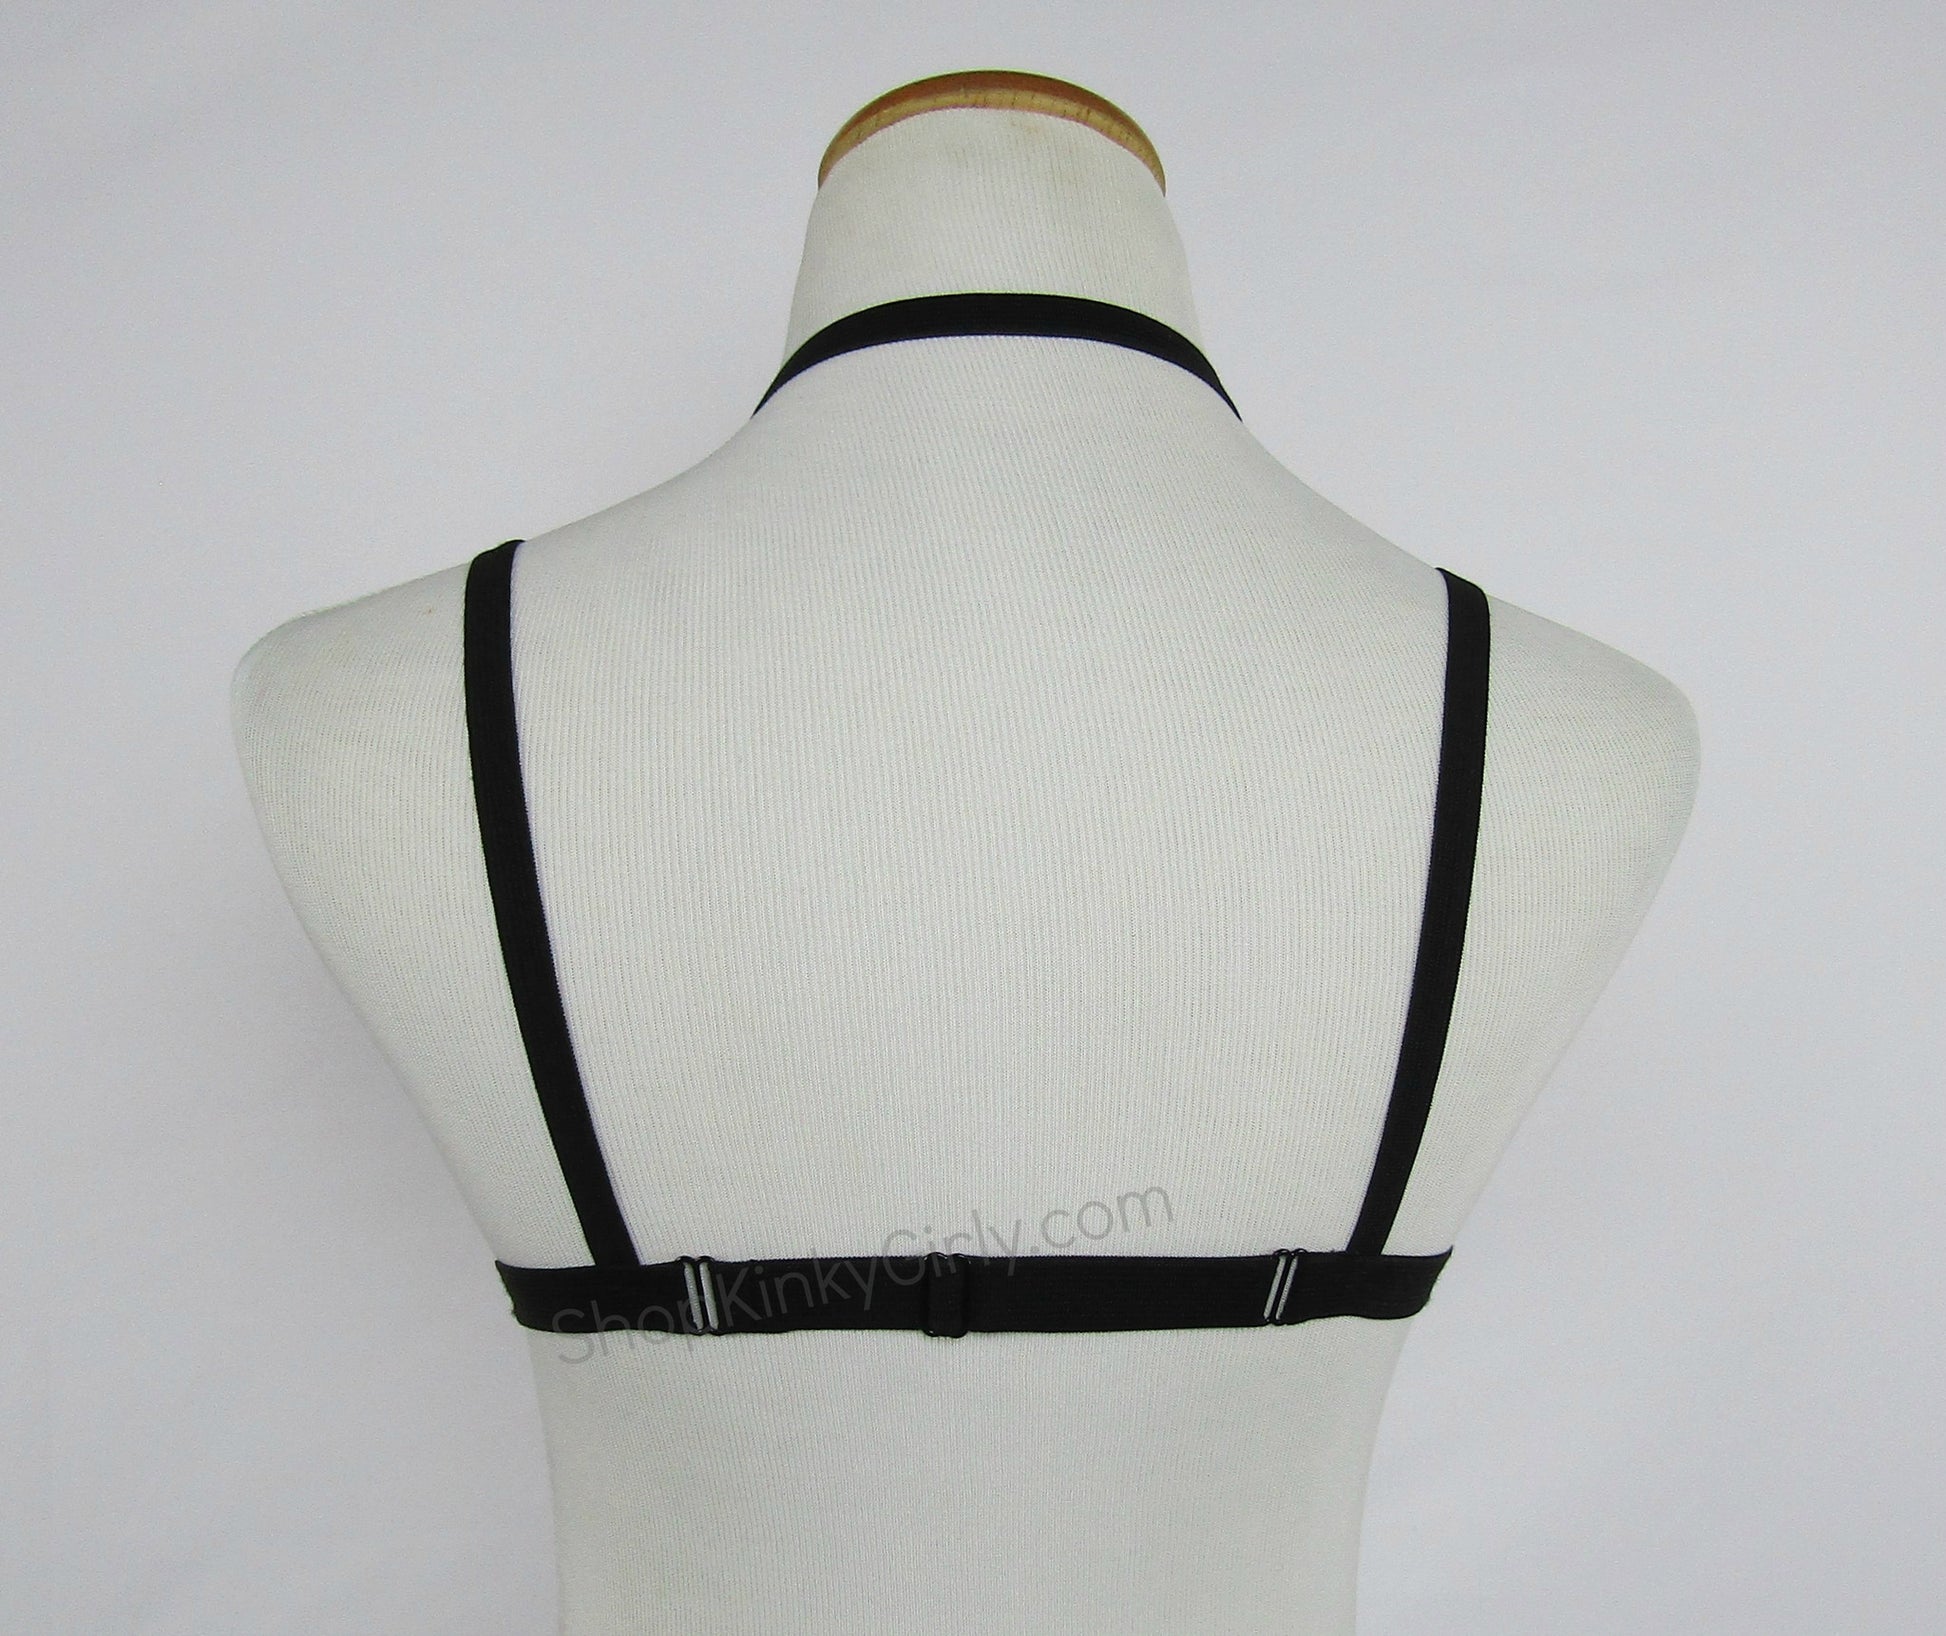 Bettie chest harness - KinkyGirly - 3